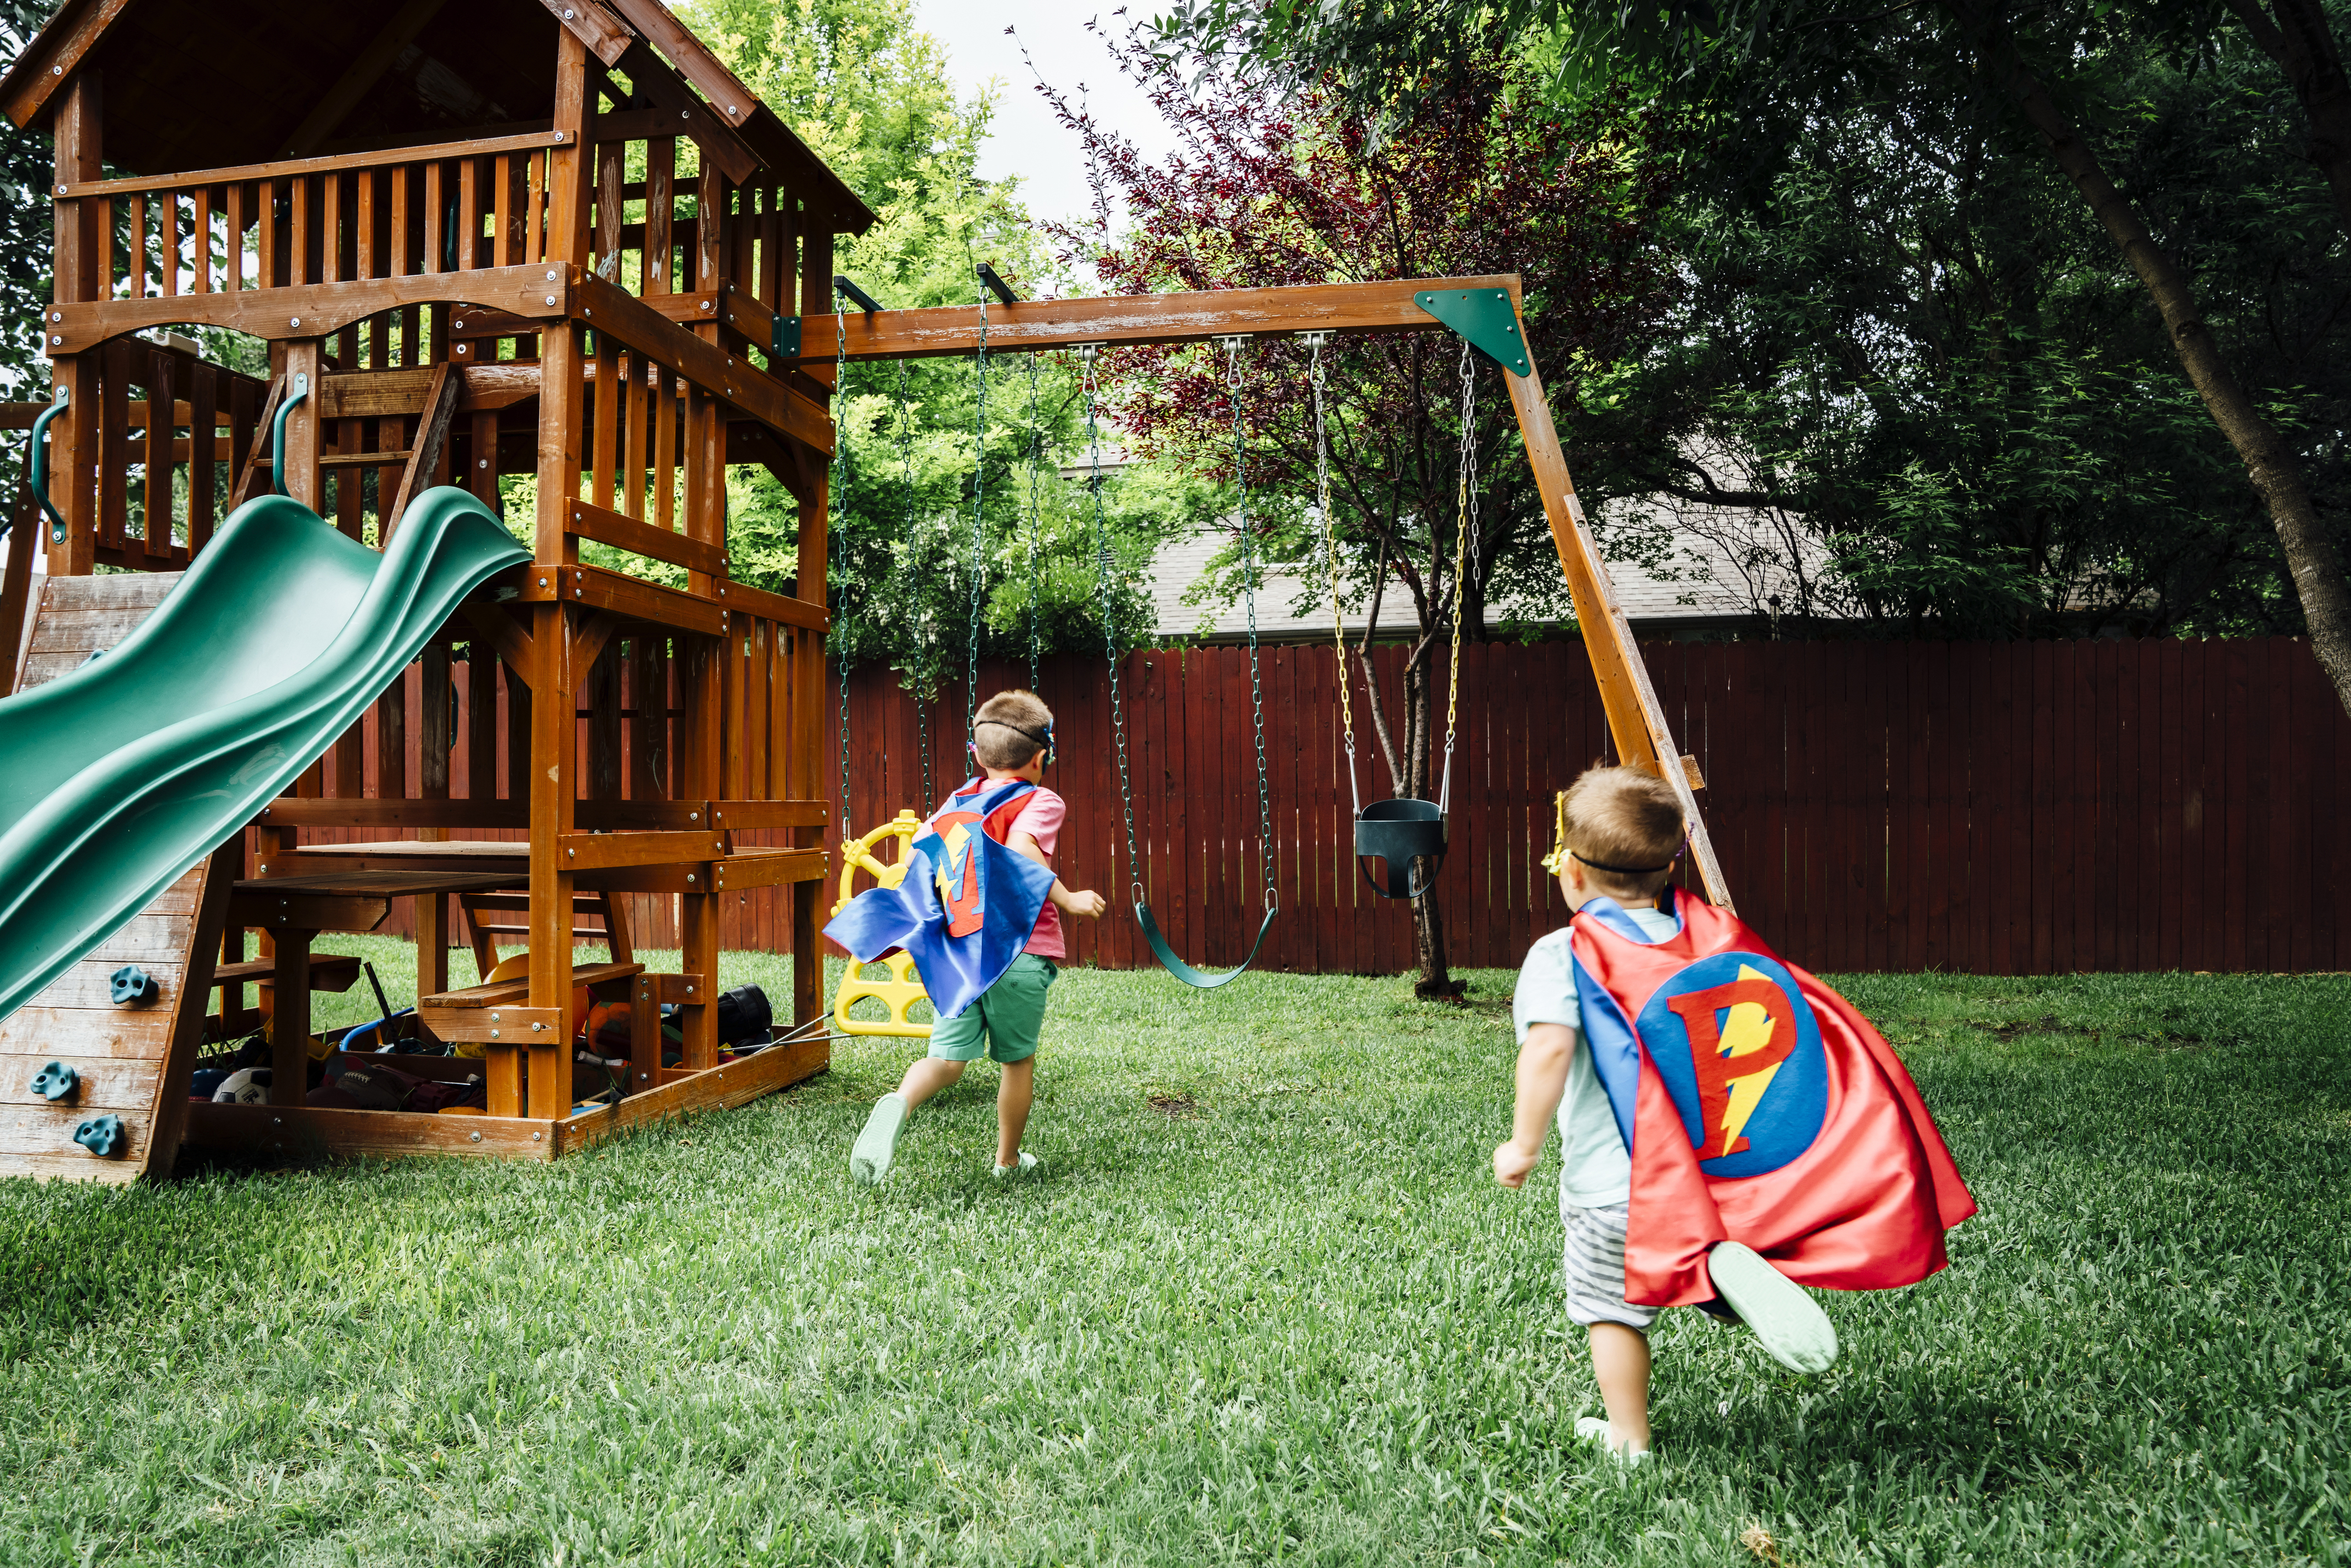 Two children wearing superhero capes play near a swing set in a backyard